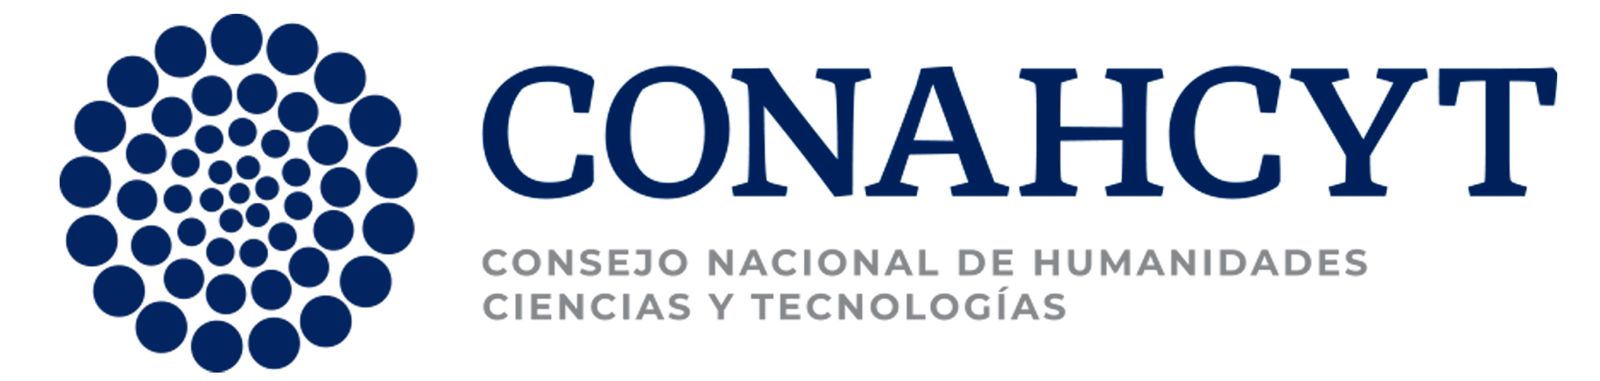 Logo Conahcyt